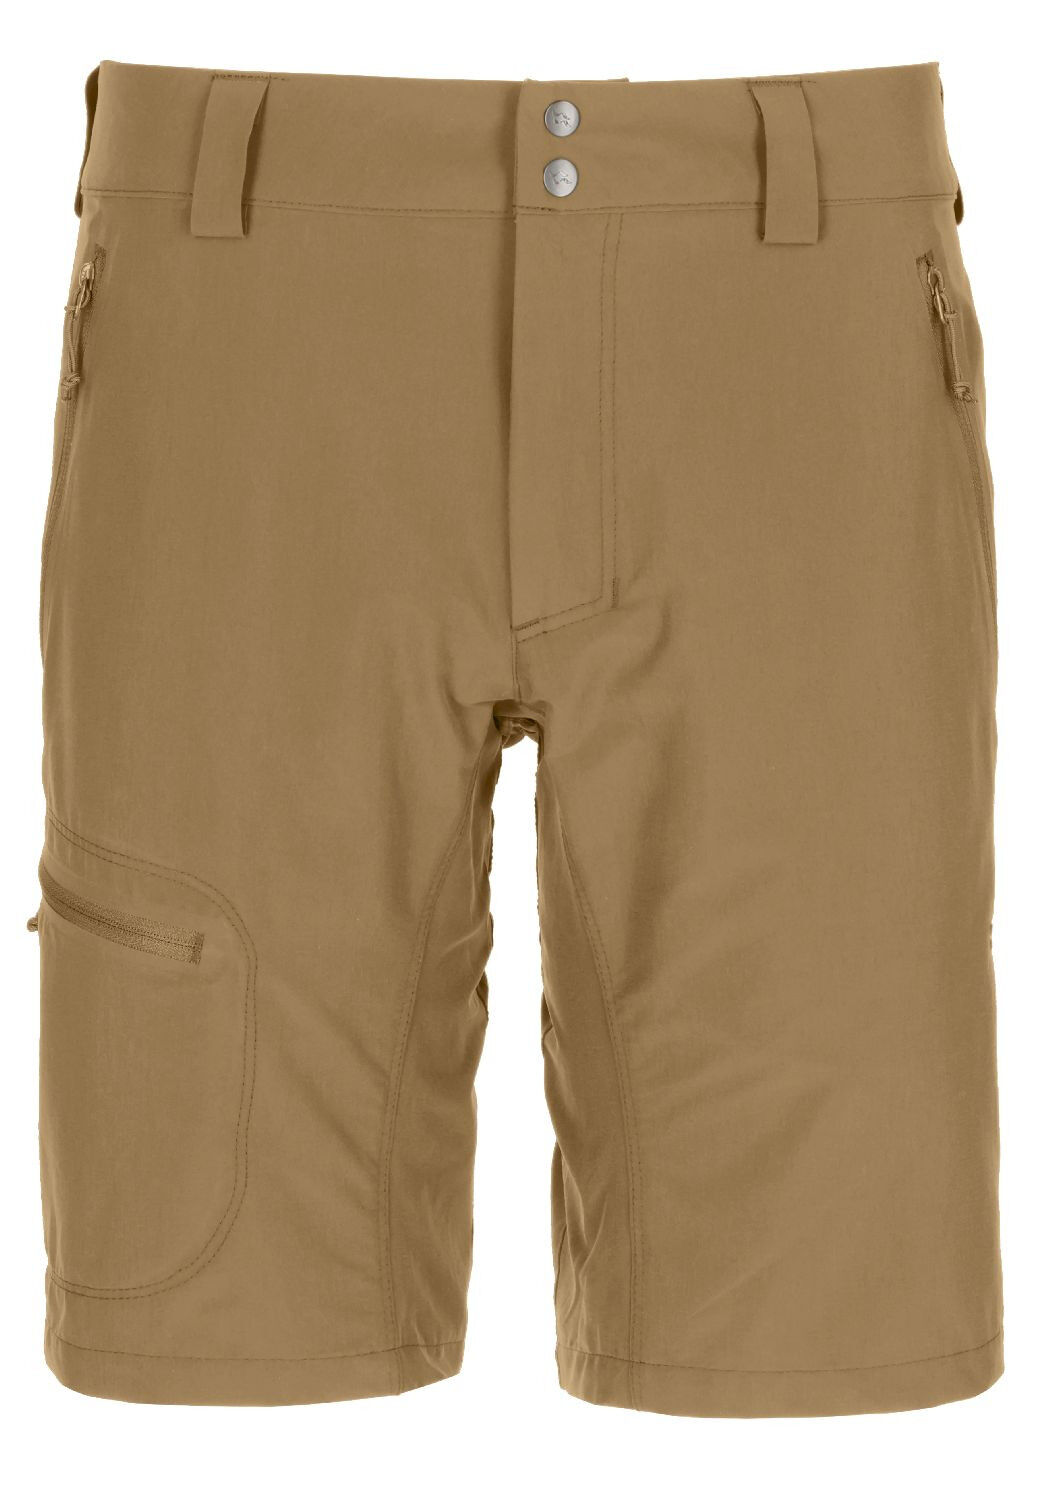 Rab Incline Light - Pantalones cortos - Hombre